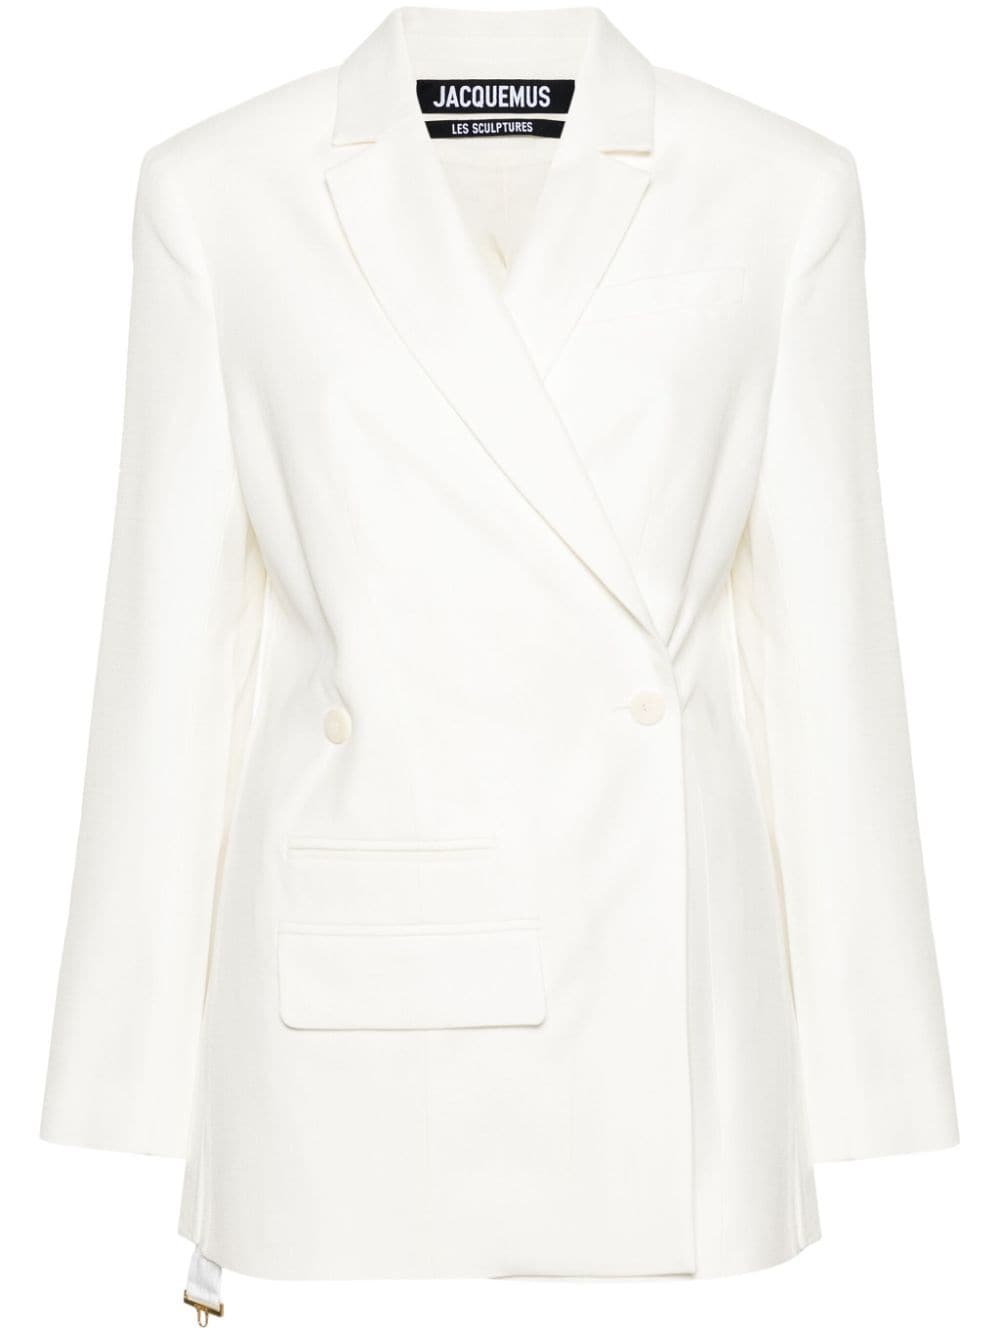 JACQUEMUS The VESTE TIBAU BLAZER: Elegant White Double-Breasted Tailored Jacket